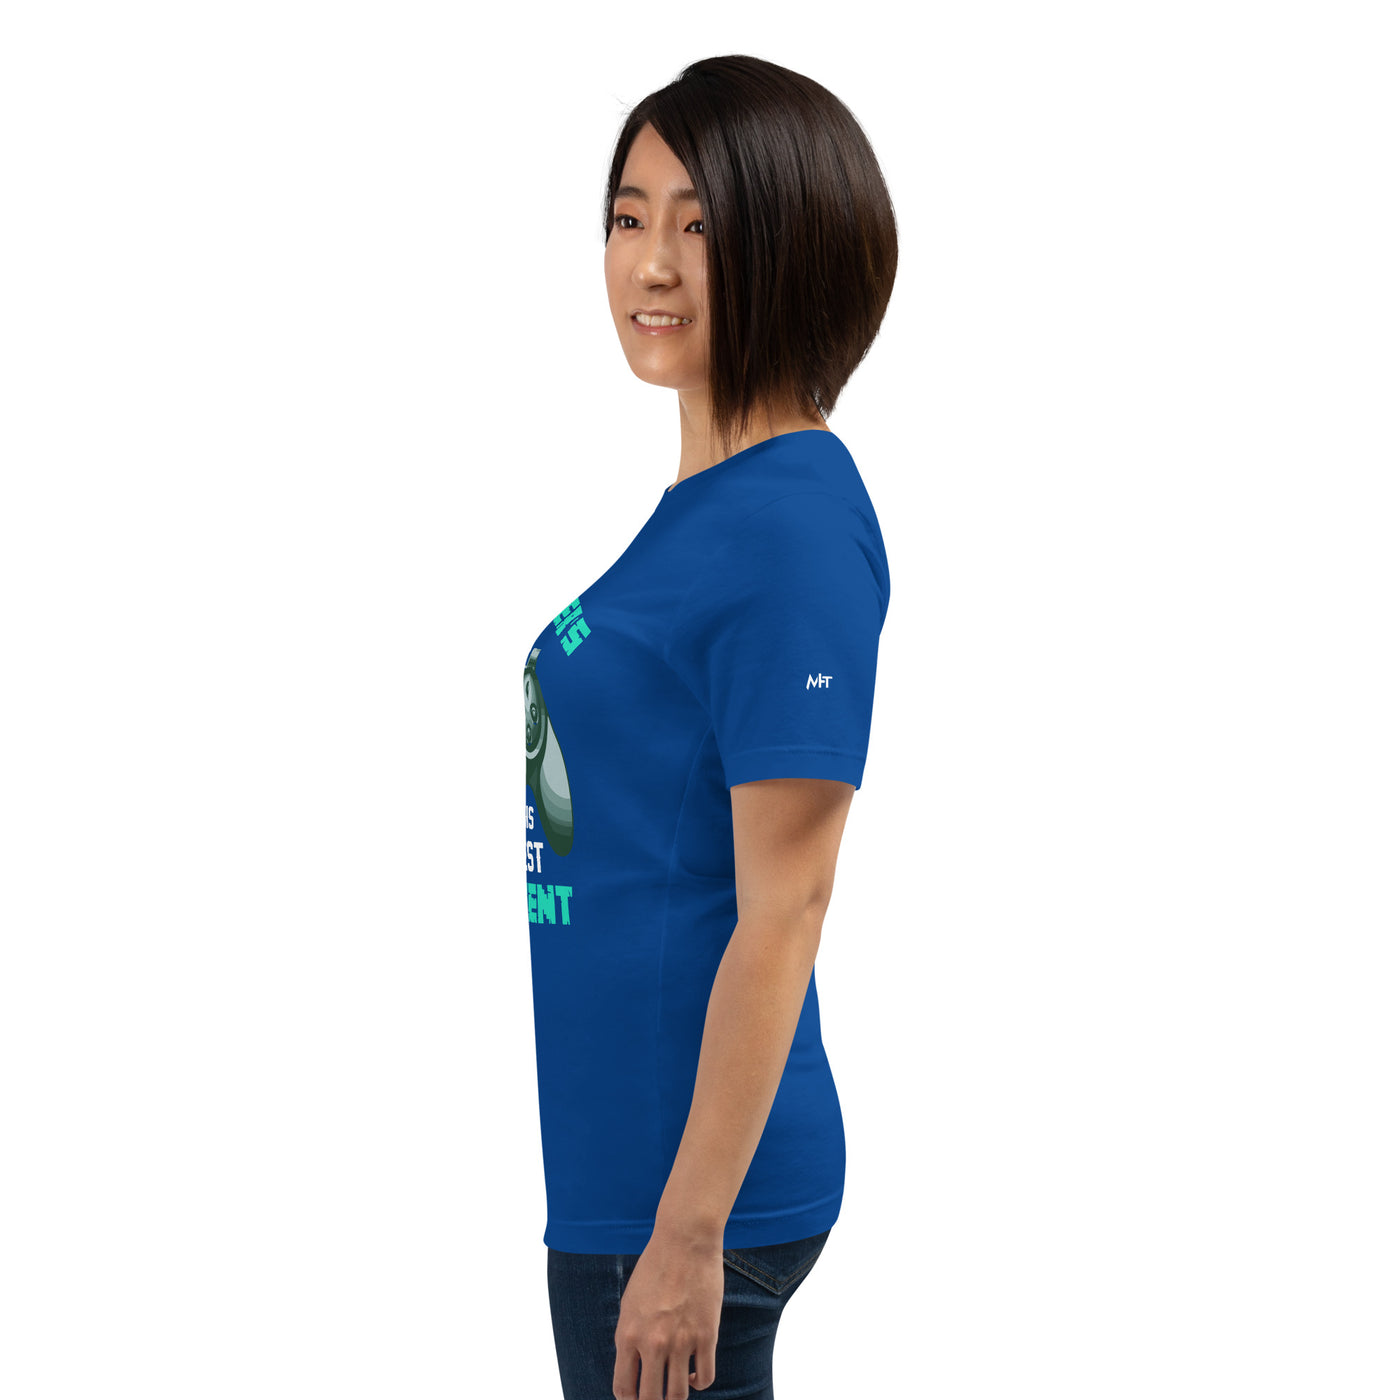 I am a Gamer's Girl - Unisex t-shirt